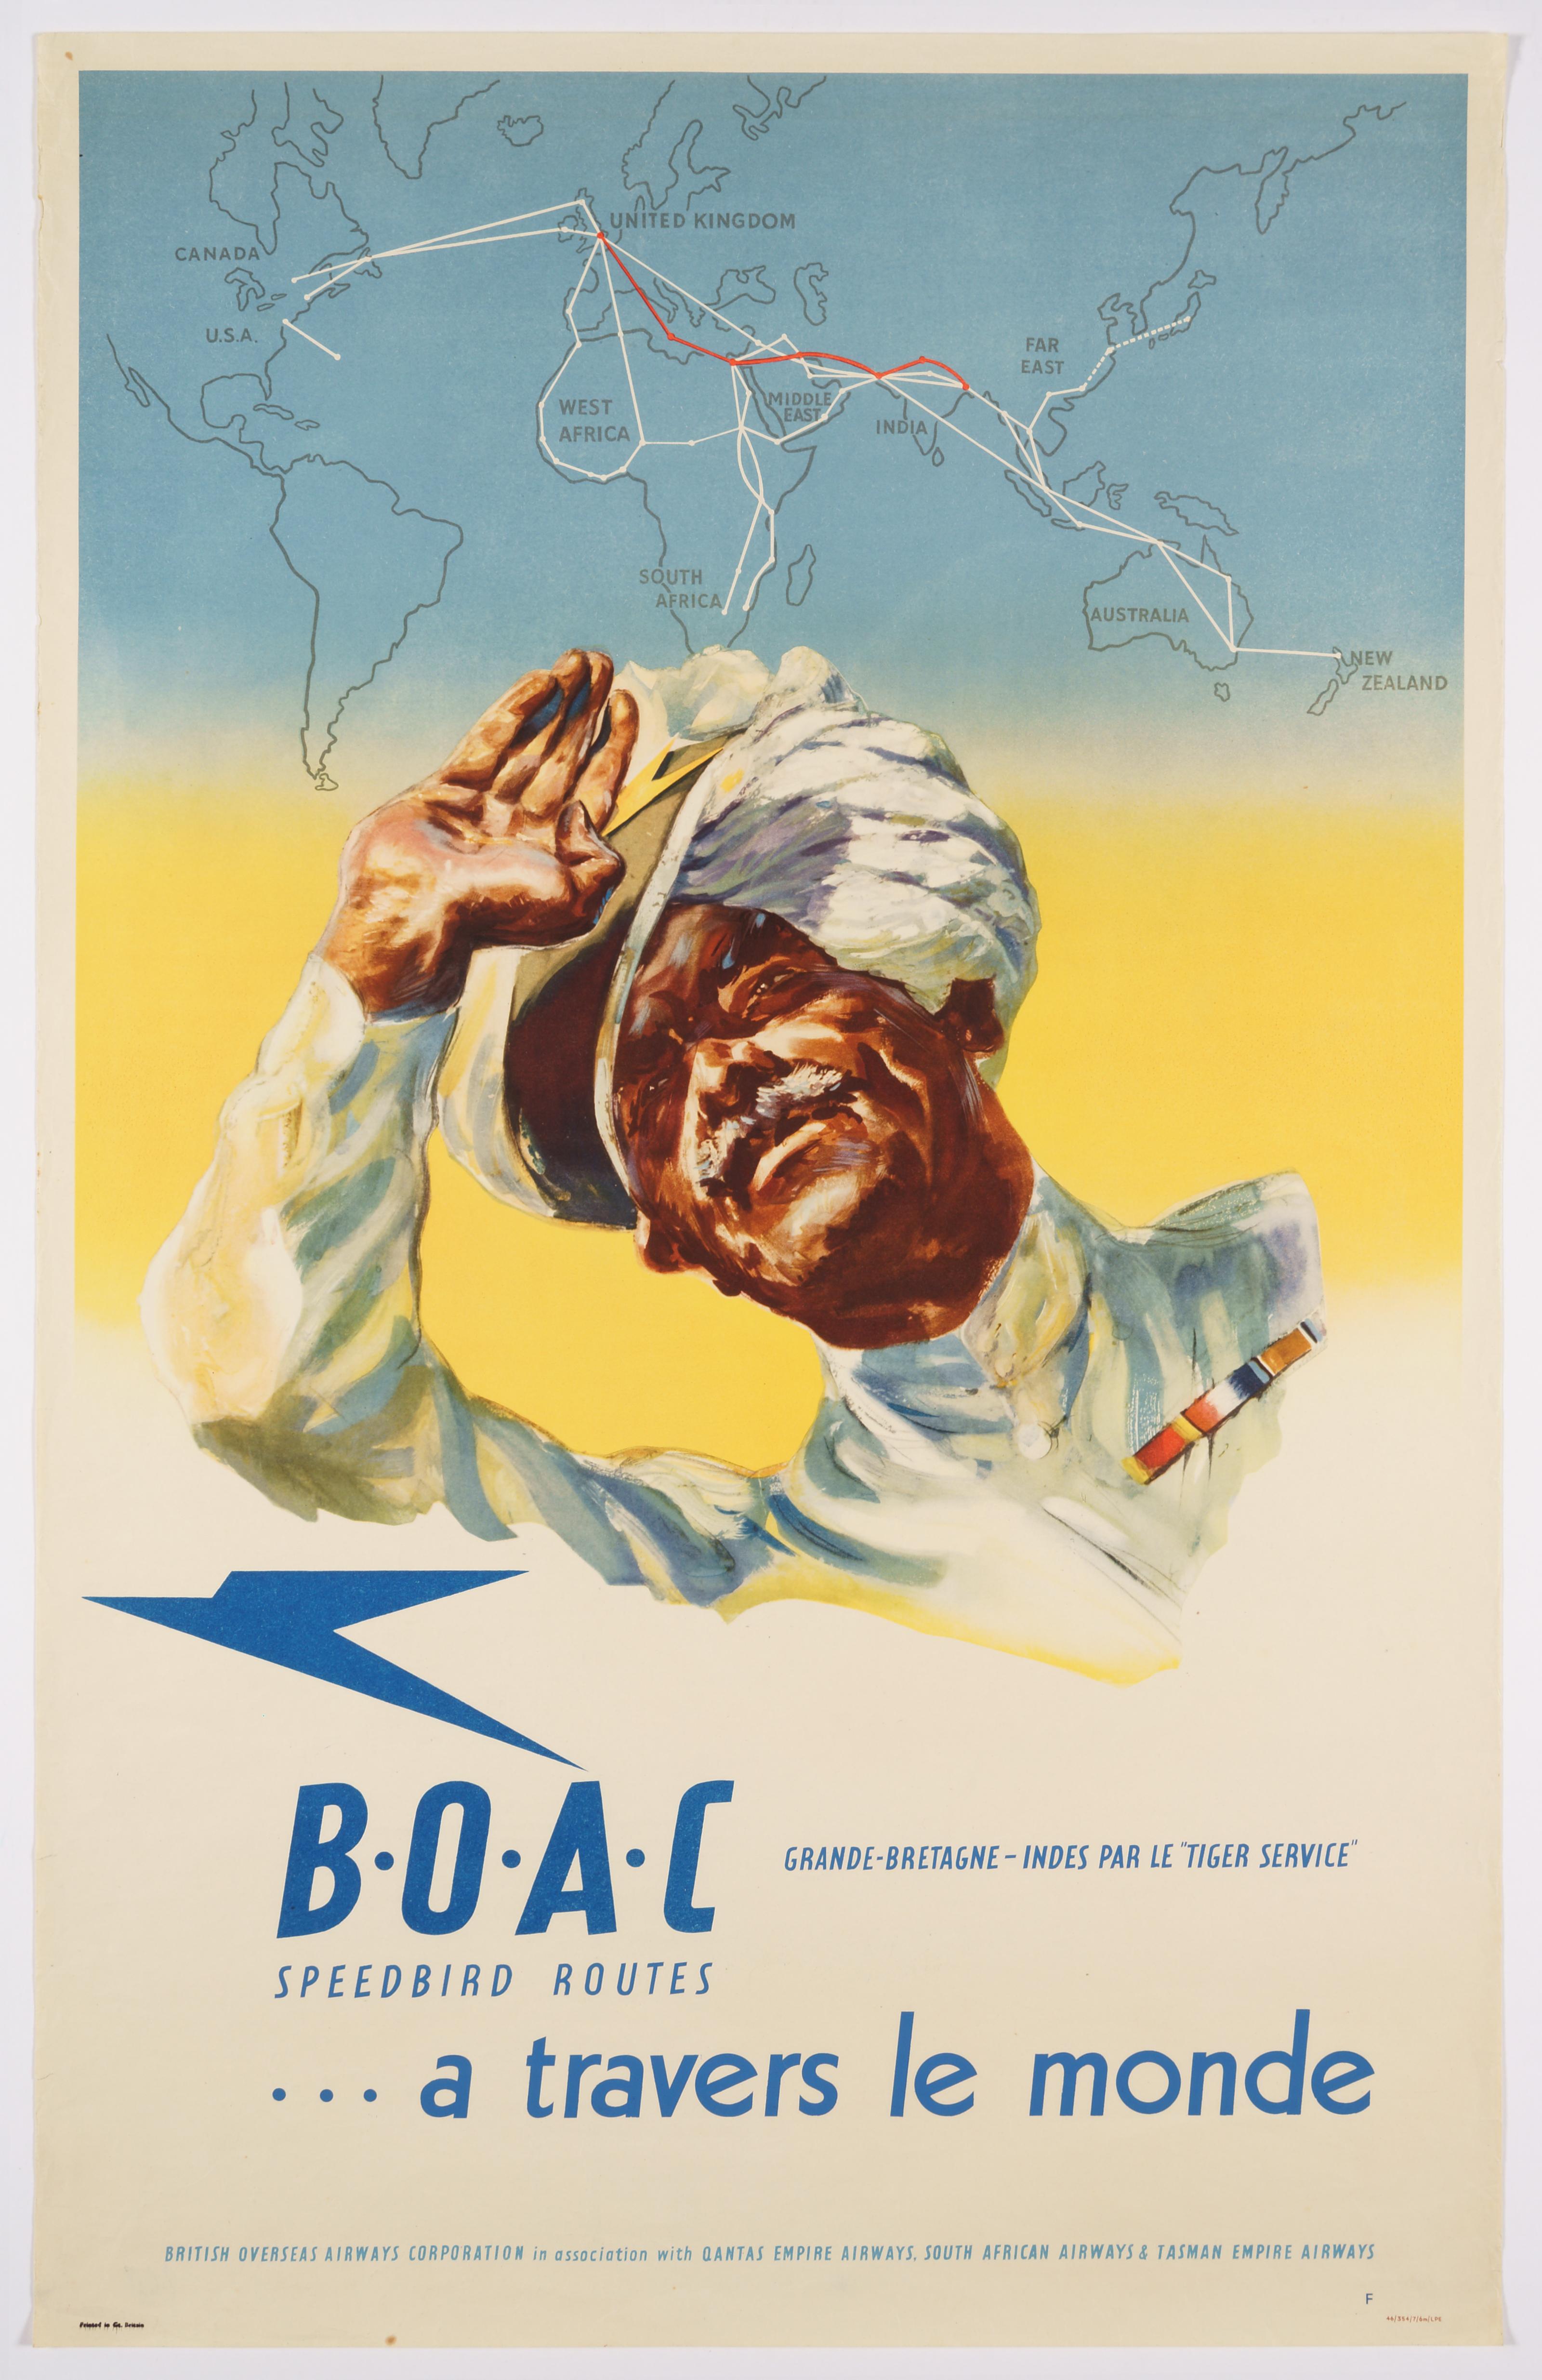 Portrait Print Harold Foster - BOAC Speedbird Routes Across the World - Original Vintage British Airline Poster